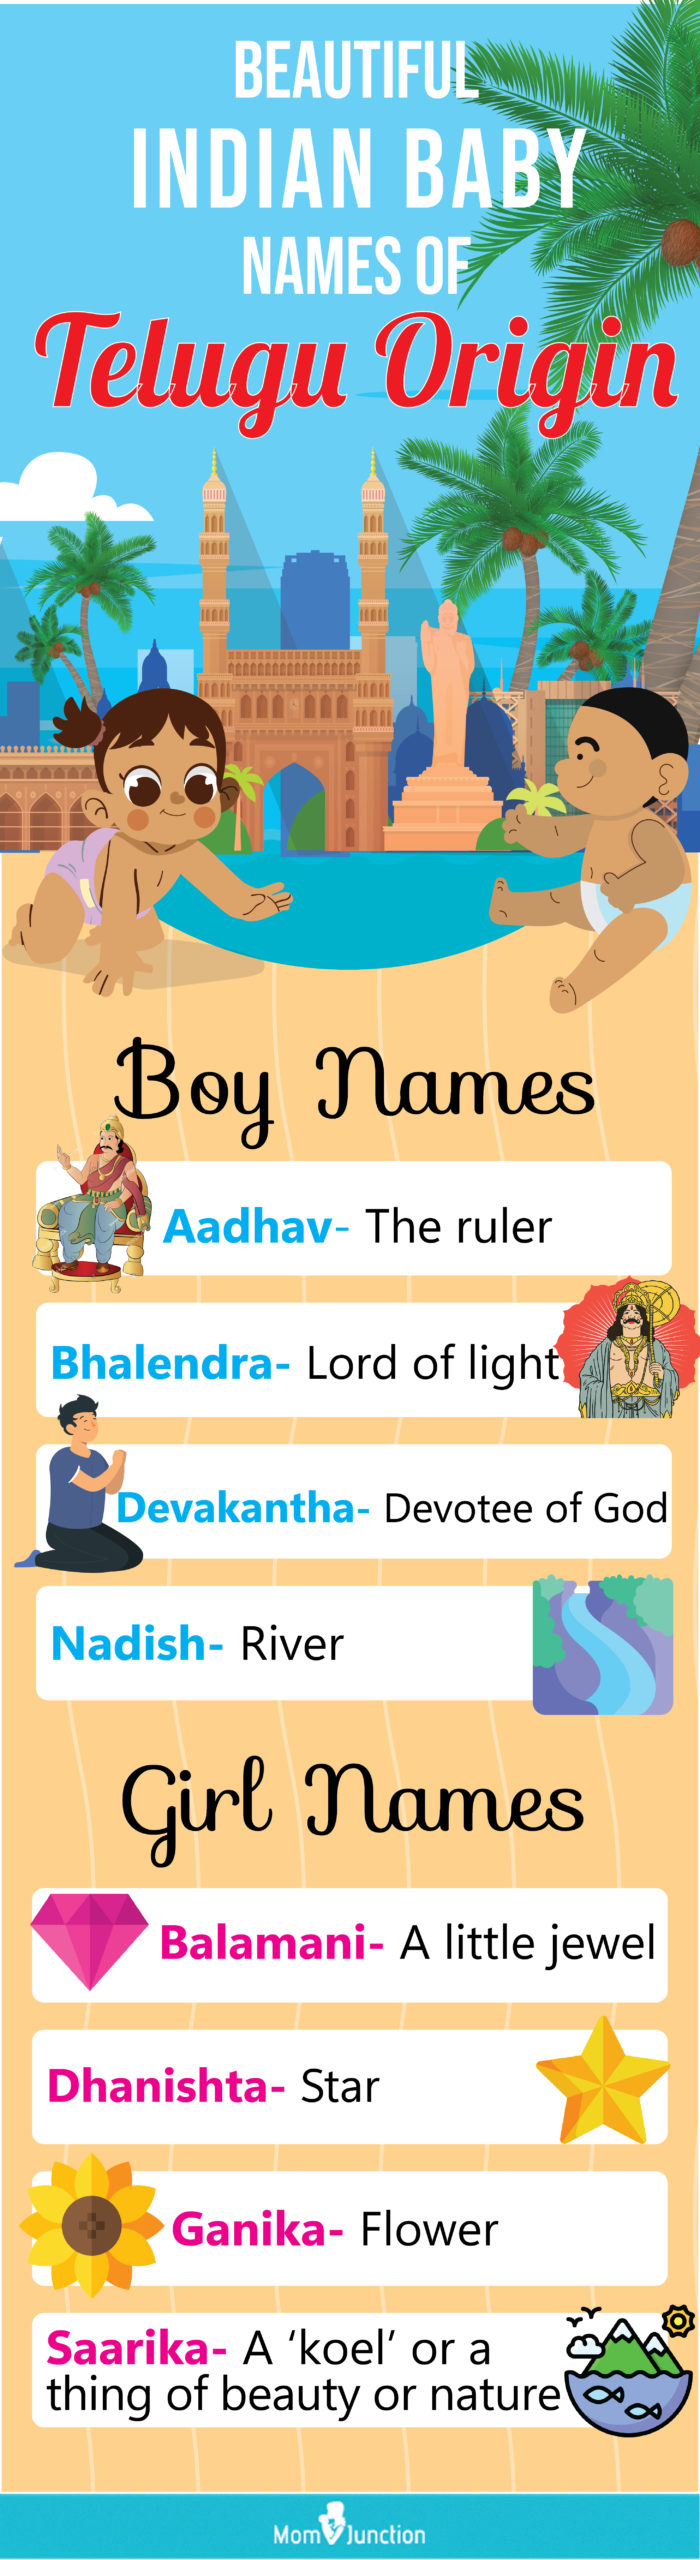 beautiful indian baby names of telugu origin [infographic]